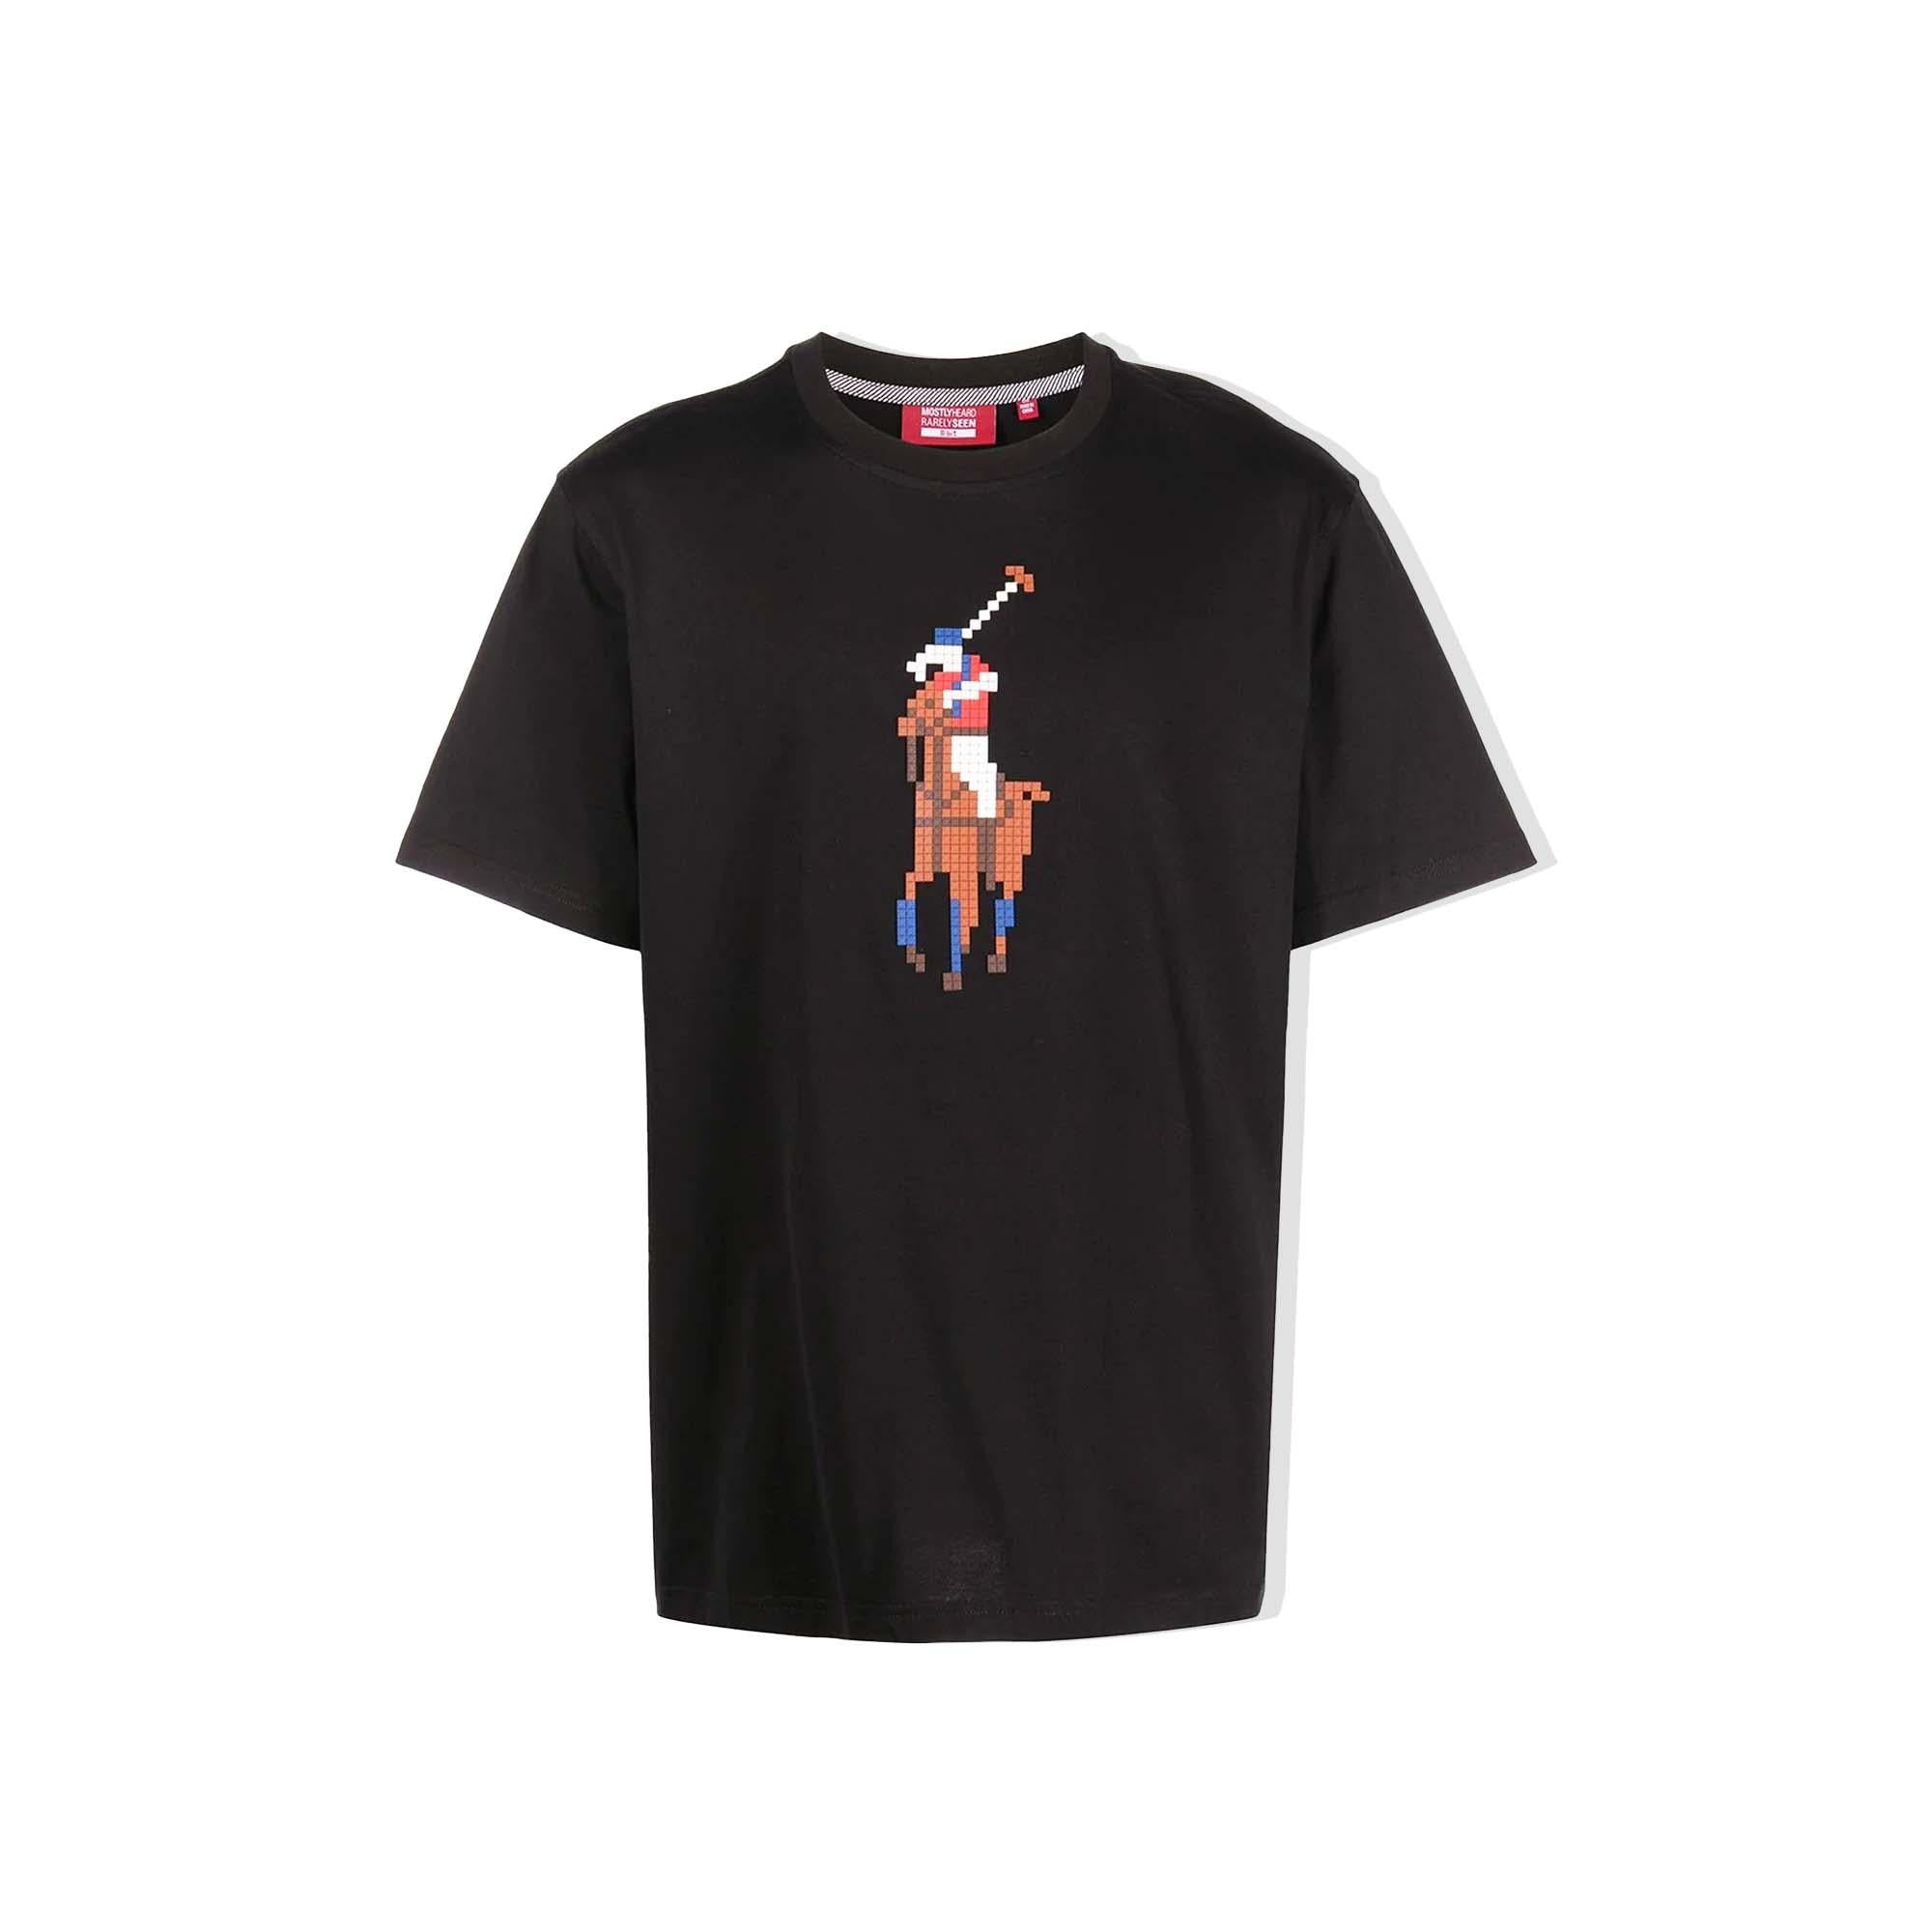 Buy 8-Bit Polo T-Shirt - Black Online